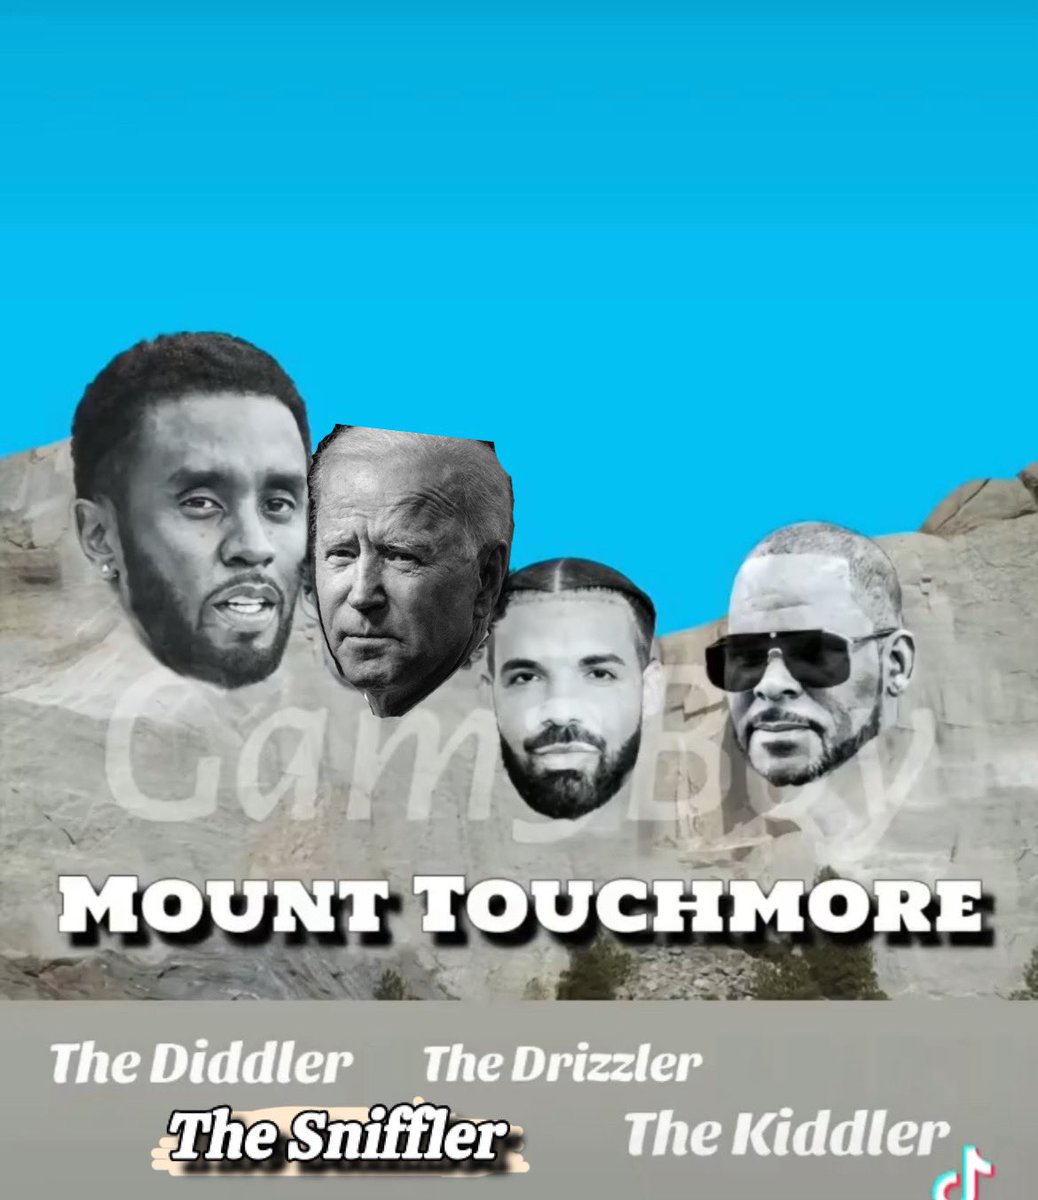 Mount Touchmore